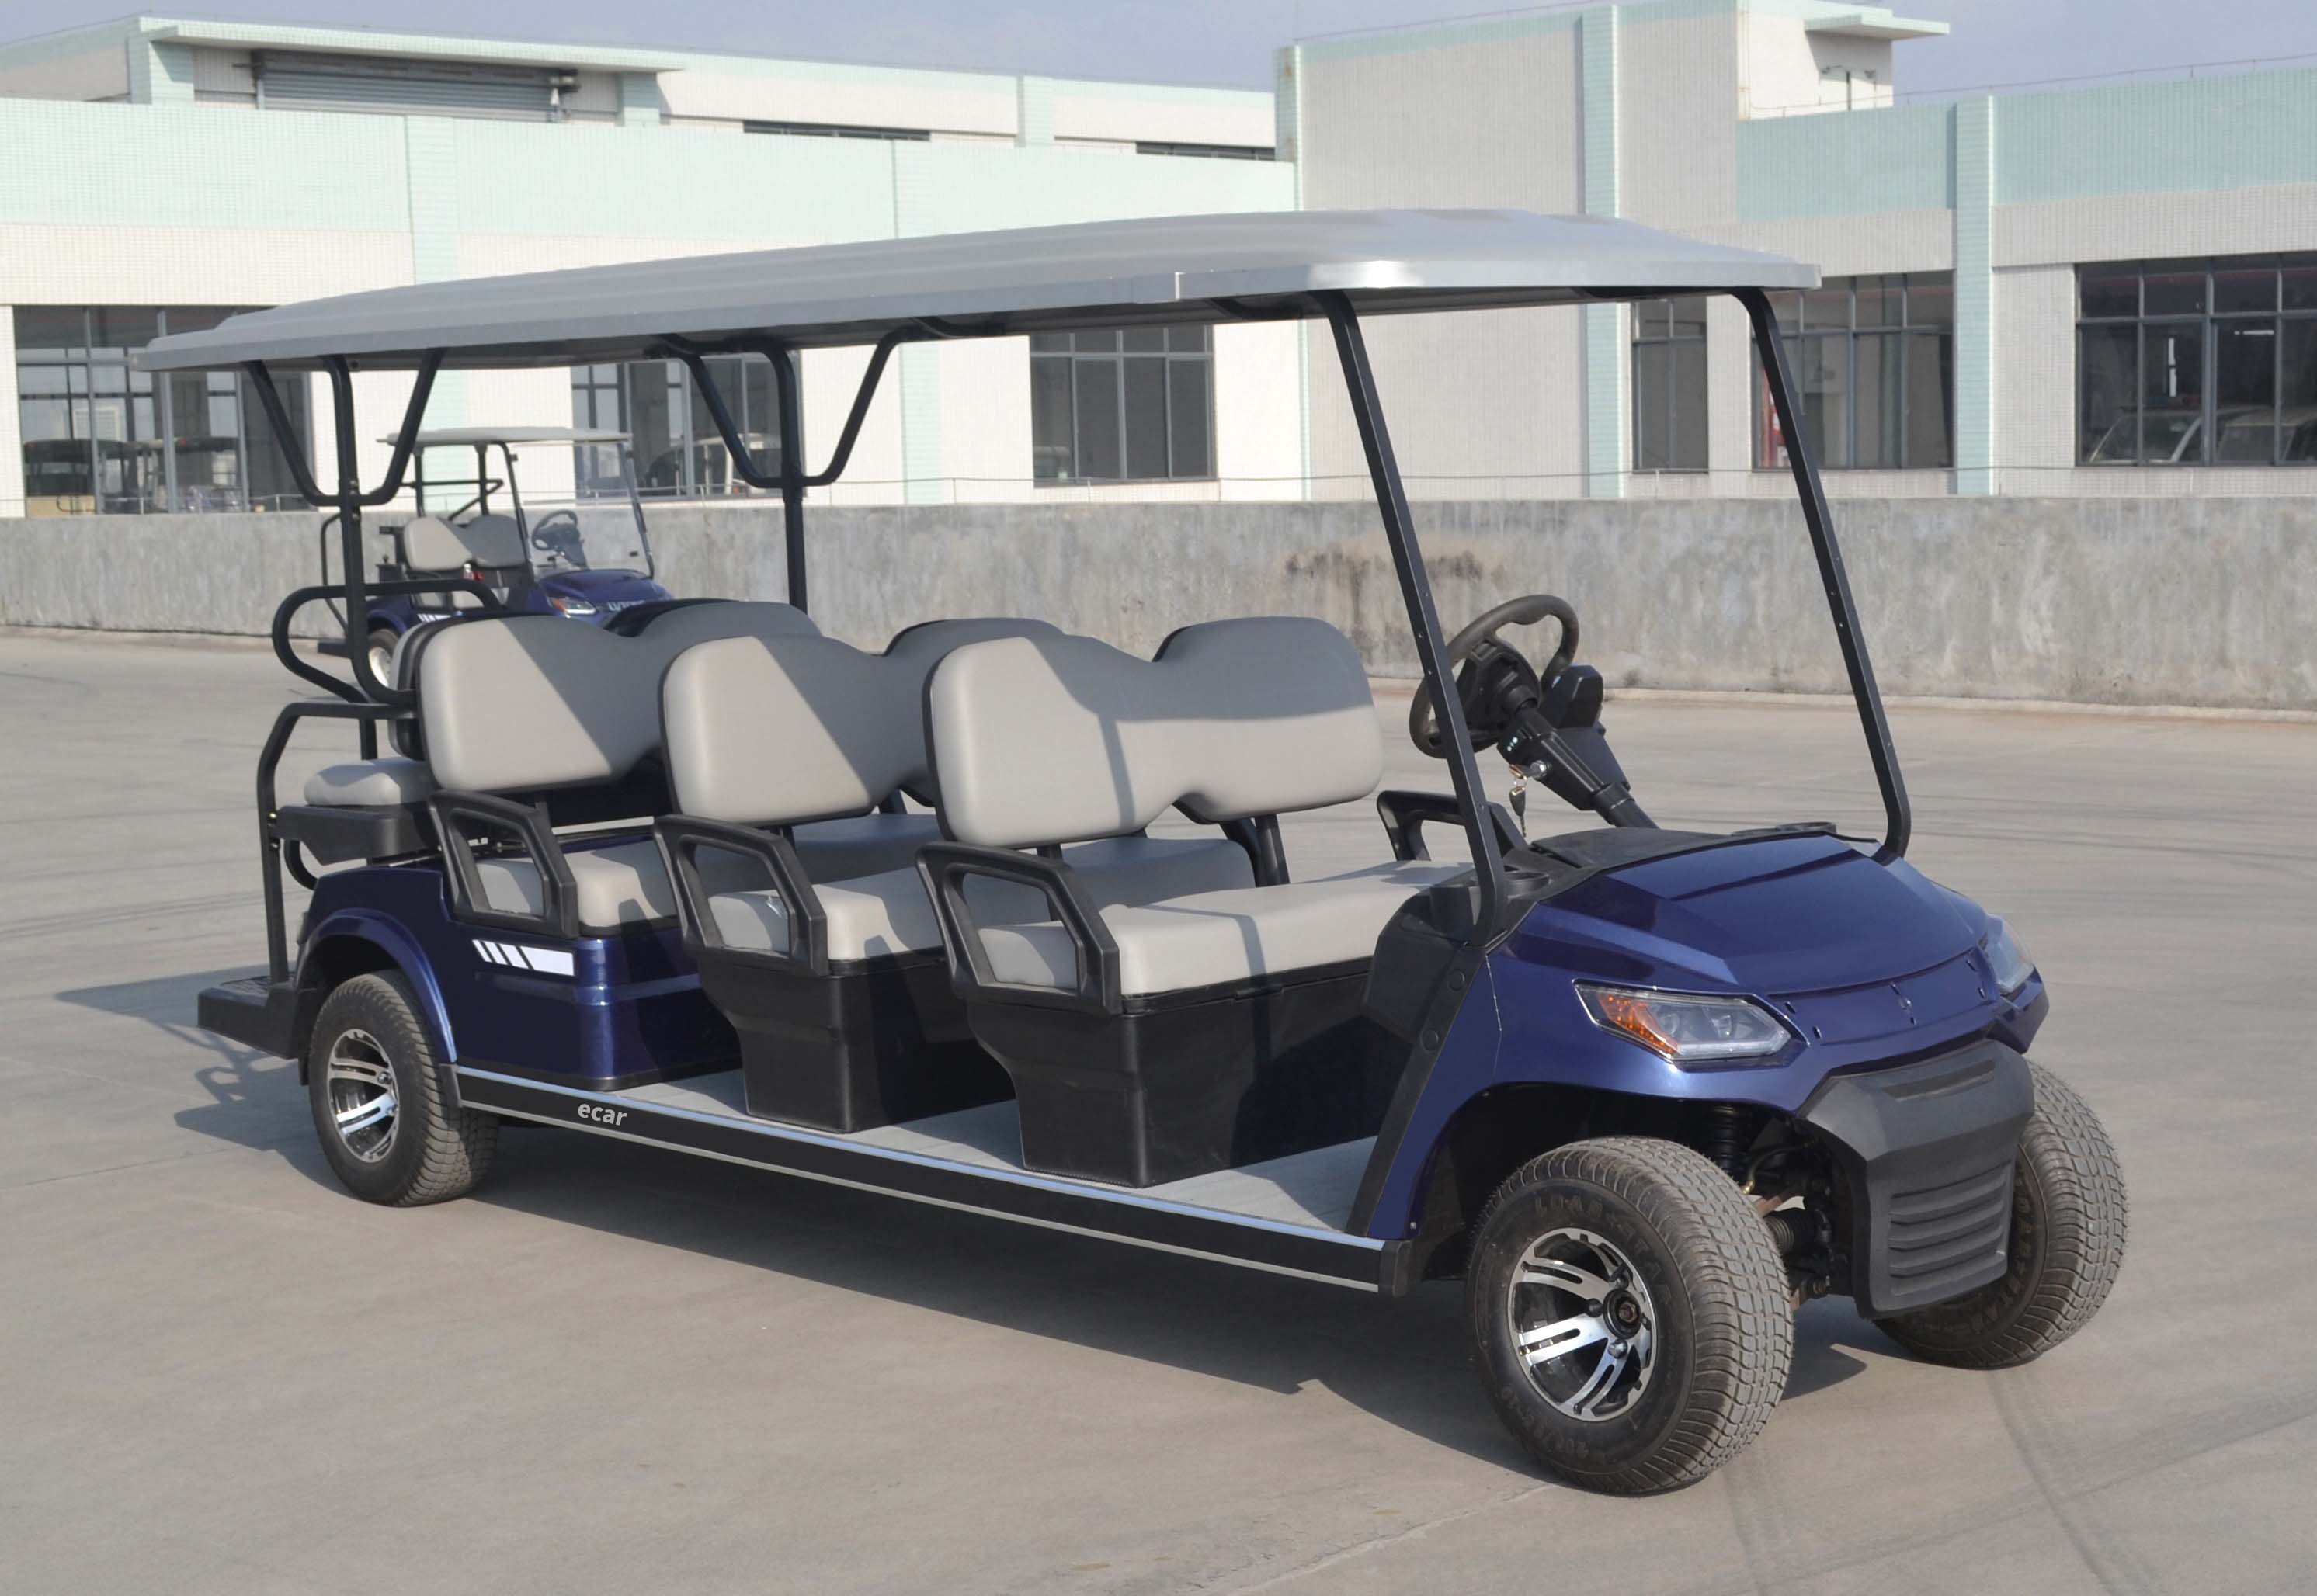 ECAR LT-A827.6+2 - 8 Seaters Electric Vehicle